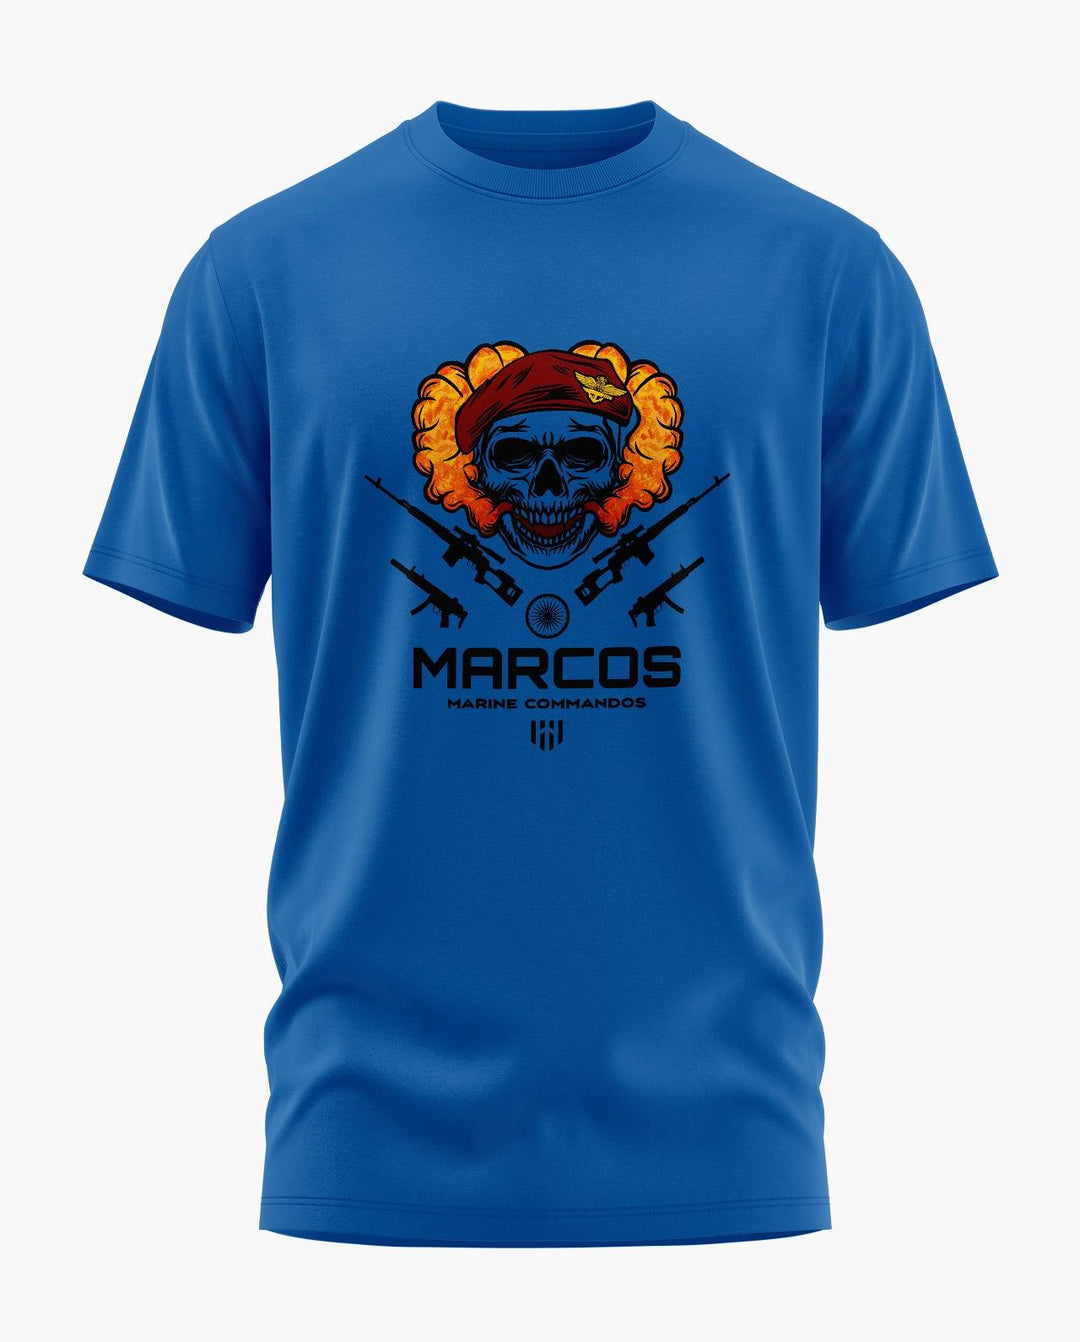 Marcos T-Shirt - Aero Armour